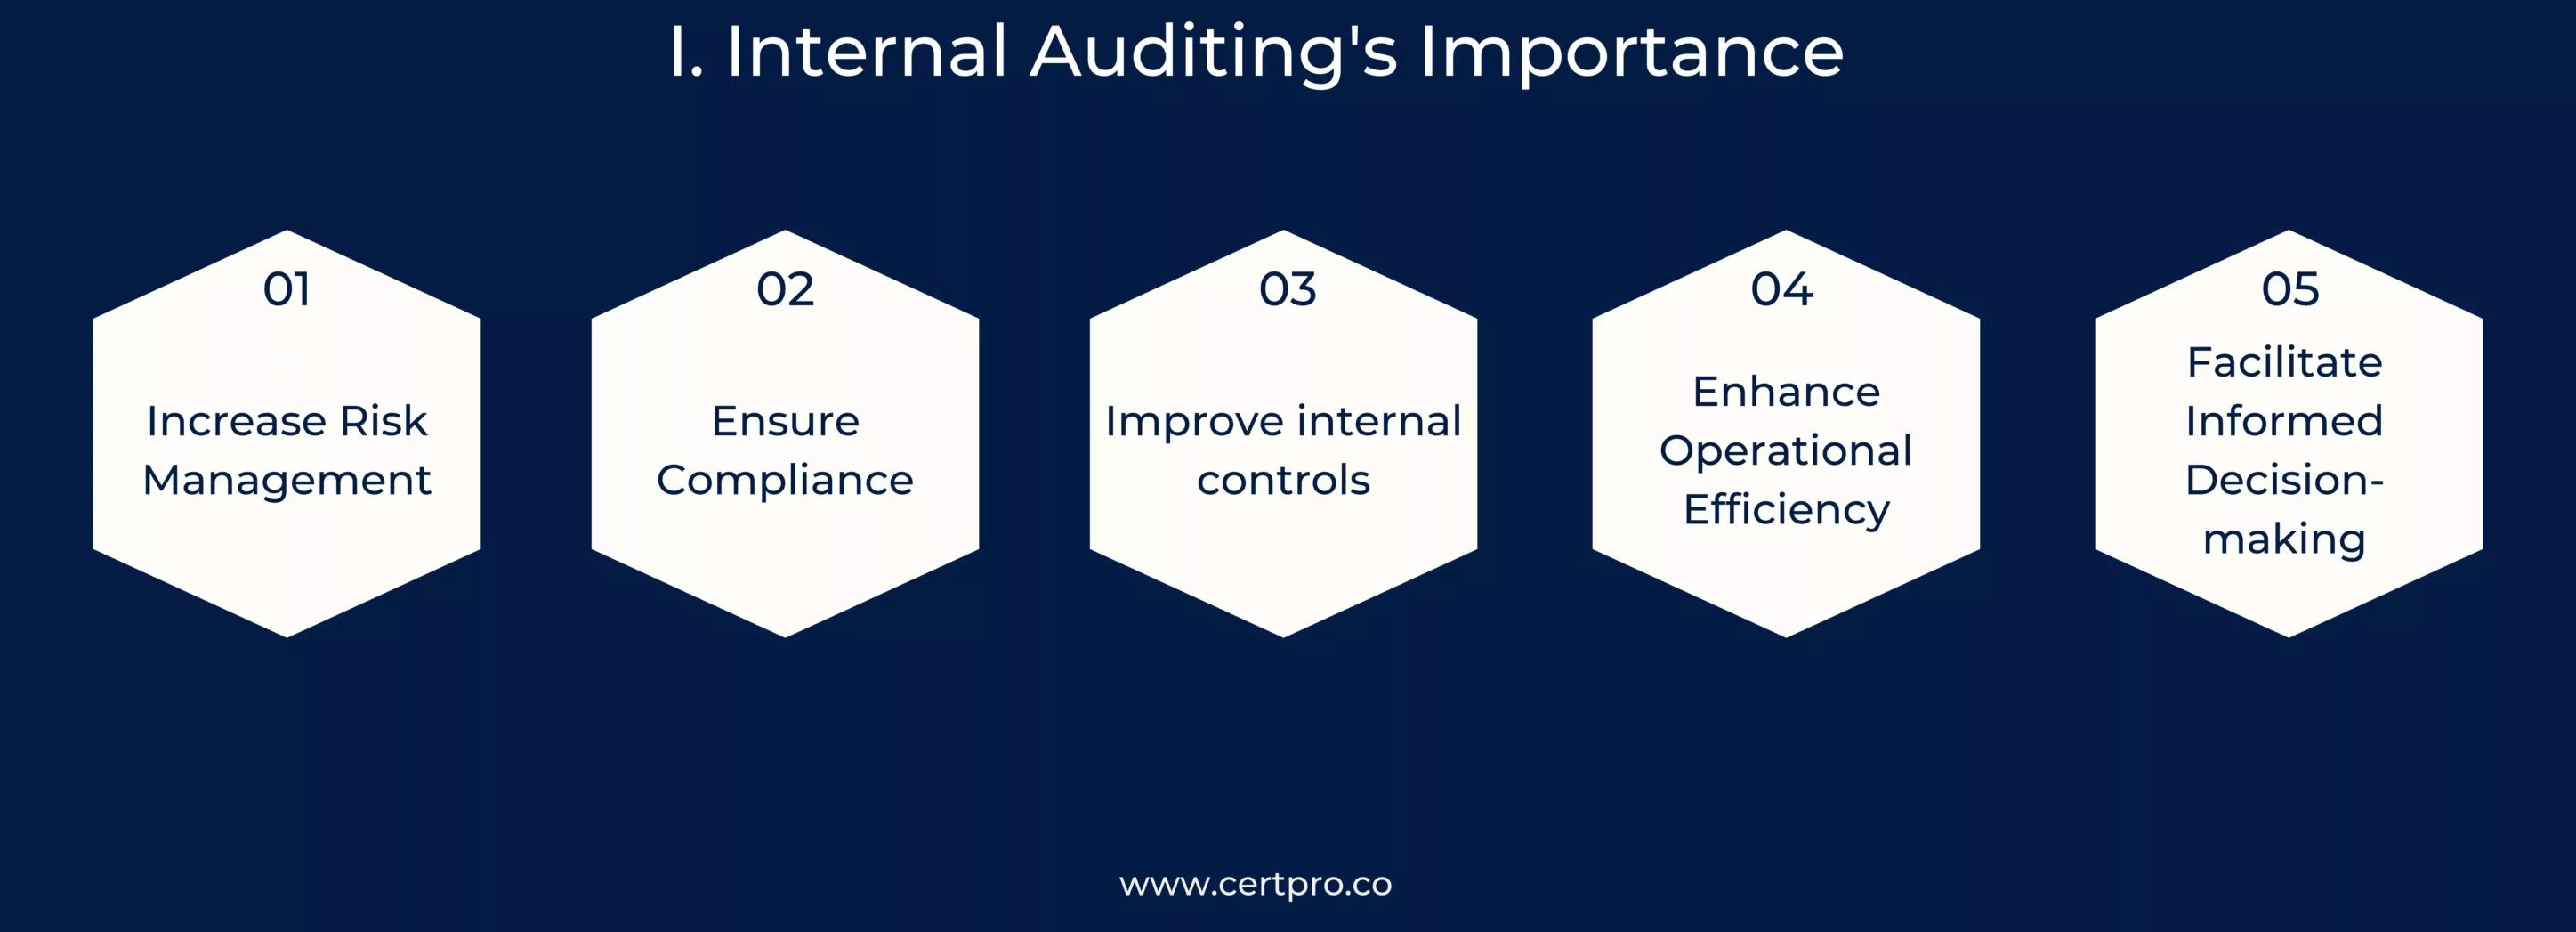 Internal Auditing's Importance